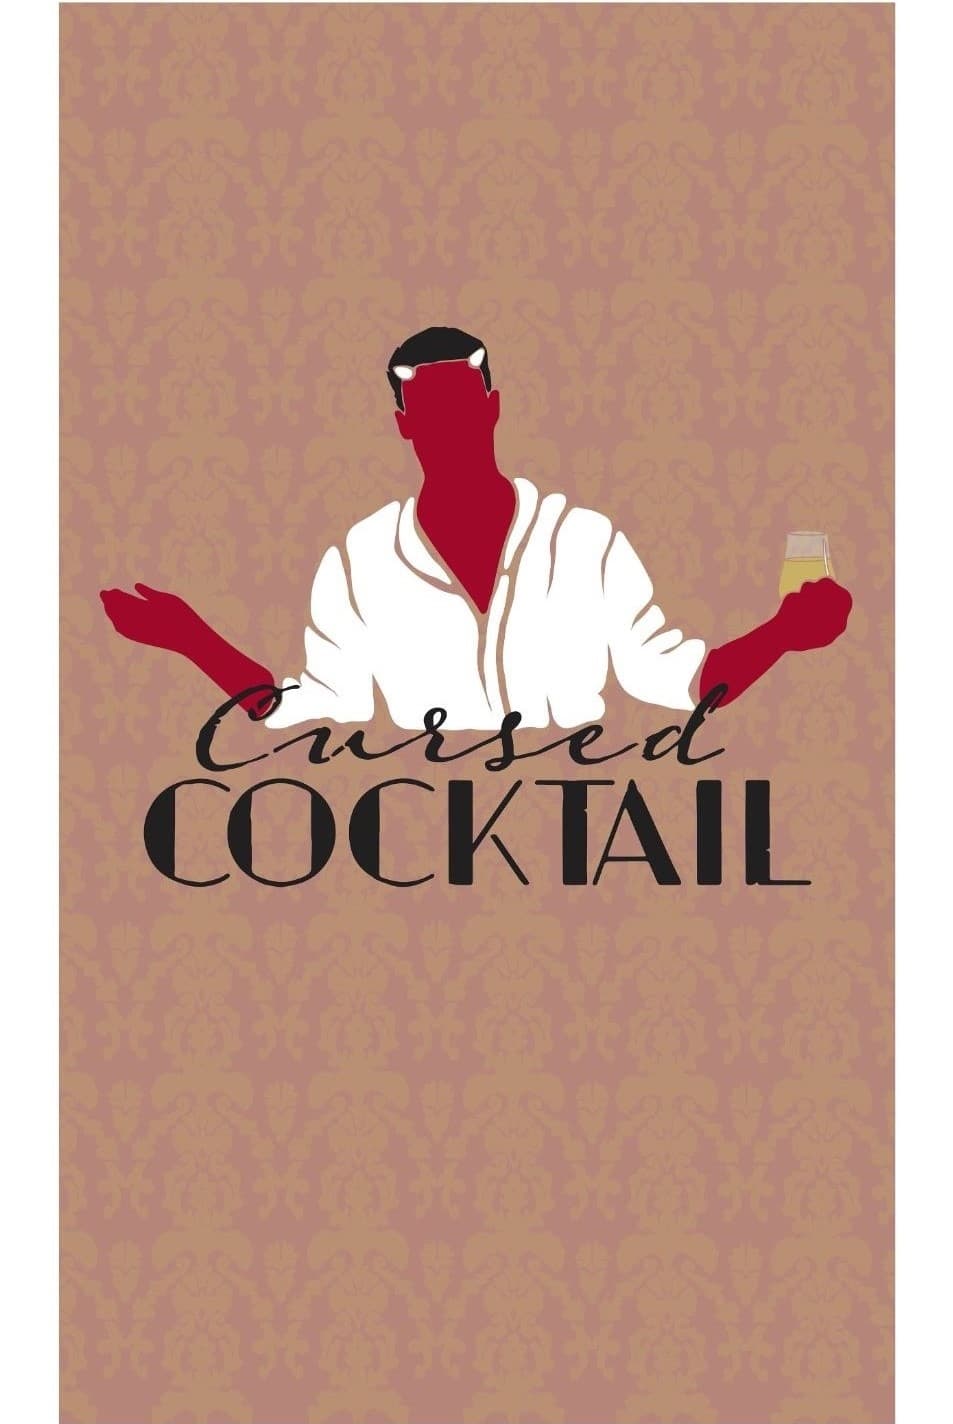 Cursed Cocktail